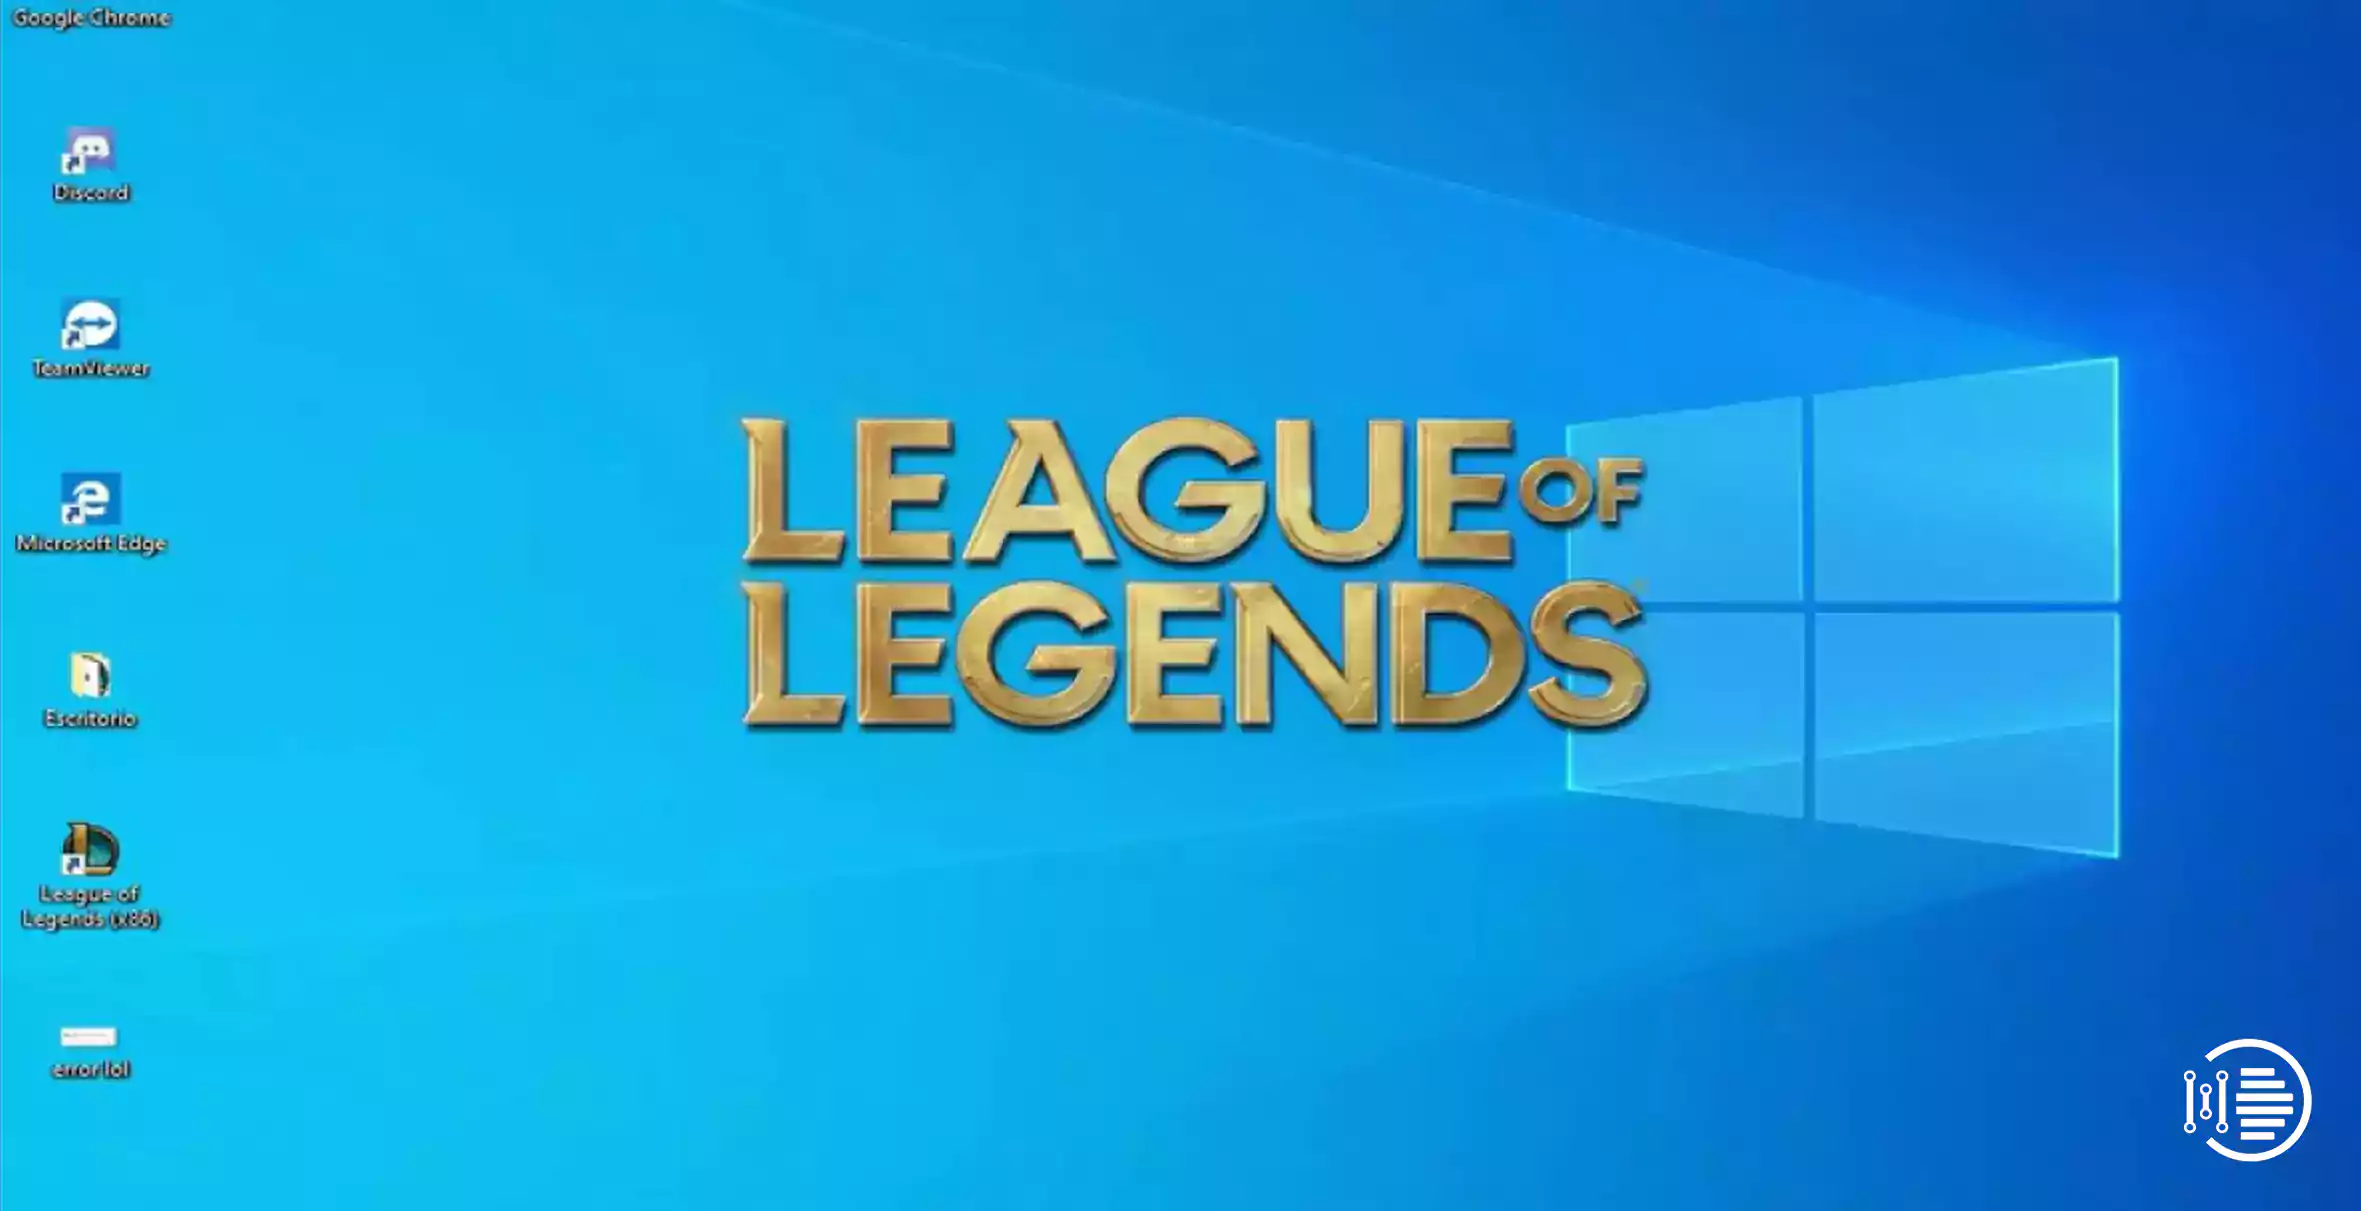 How to fix League of Legends error “Screen freezes” easily